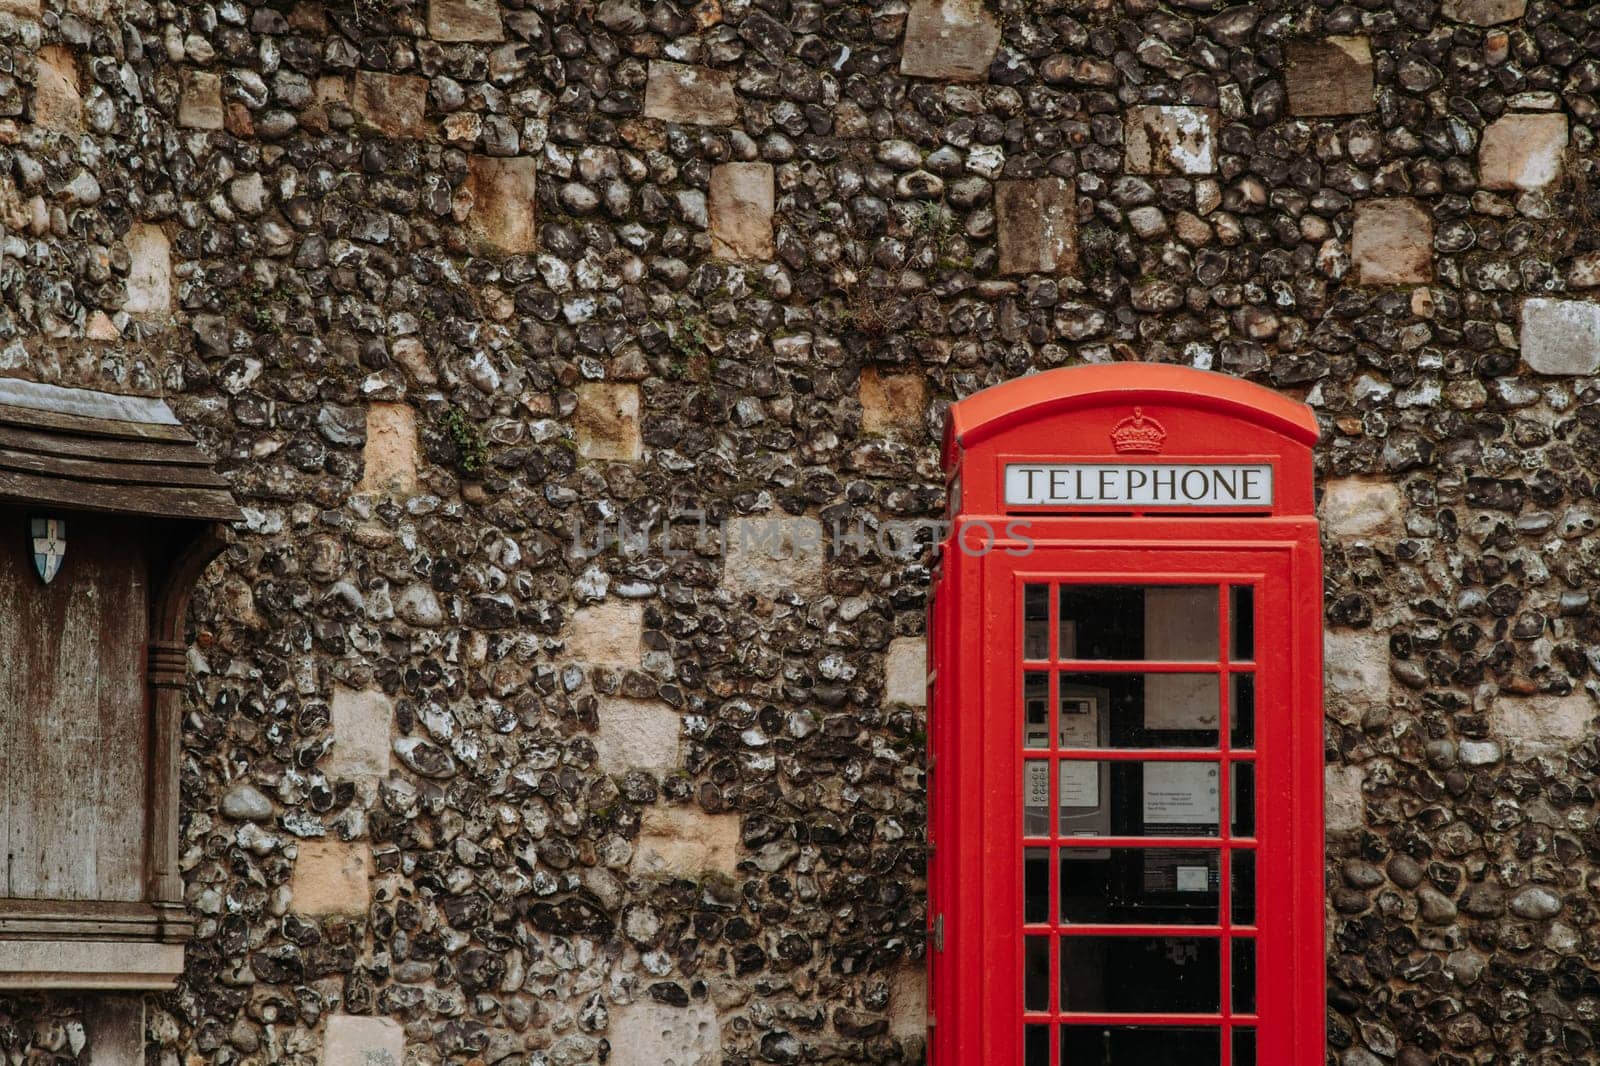 The iconic british telephone box. High quality photo